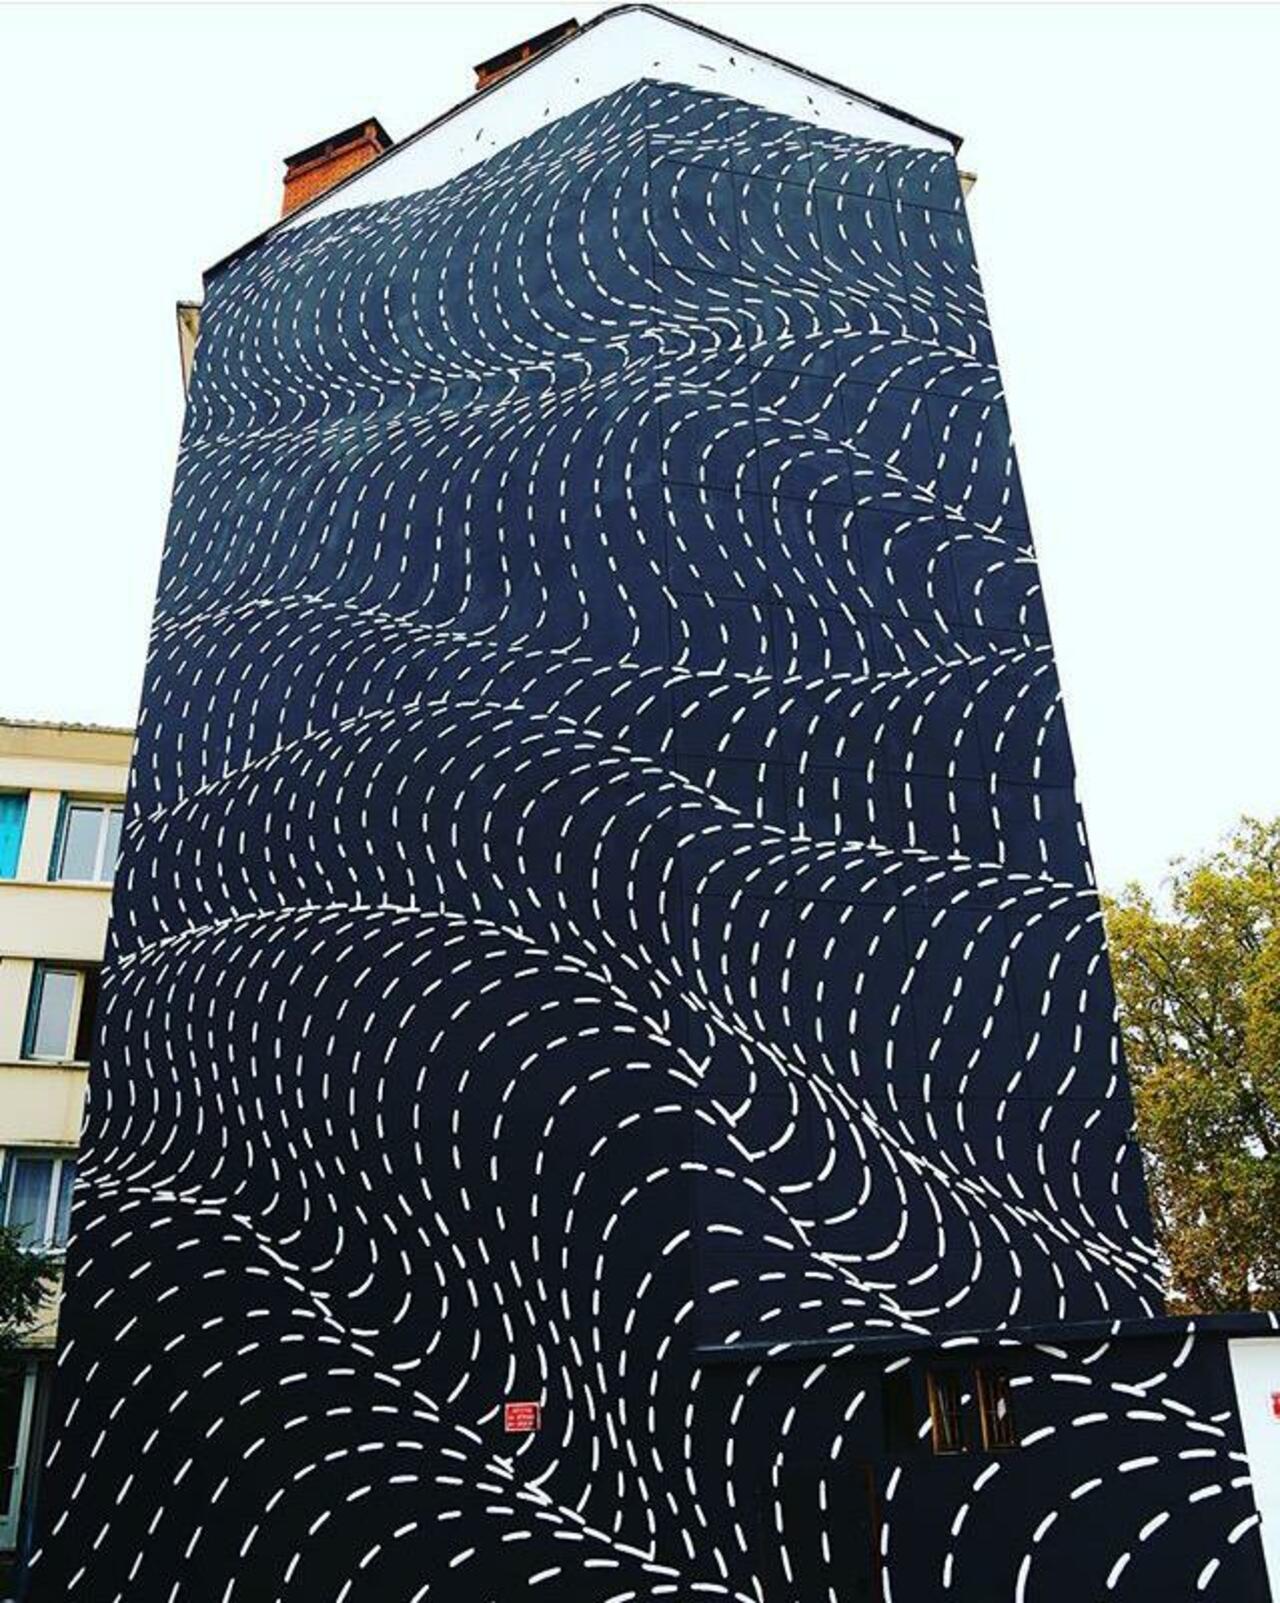 New Street Art by Brendan Monroe's for WOPS ! Festival in Toulouse, France. 

#art #graffiti #mural #streetart https://t.co/3W6S98yovY